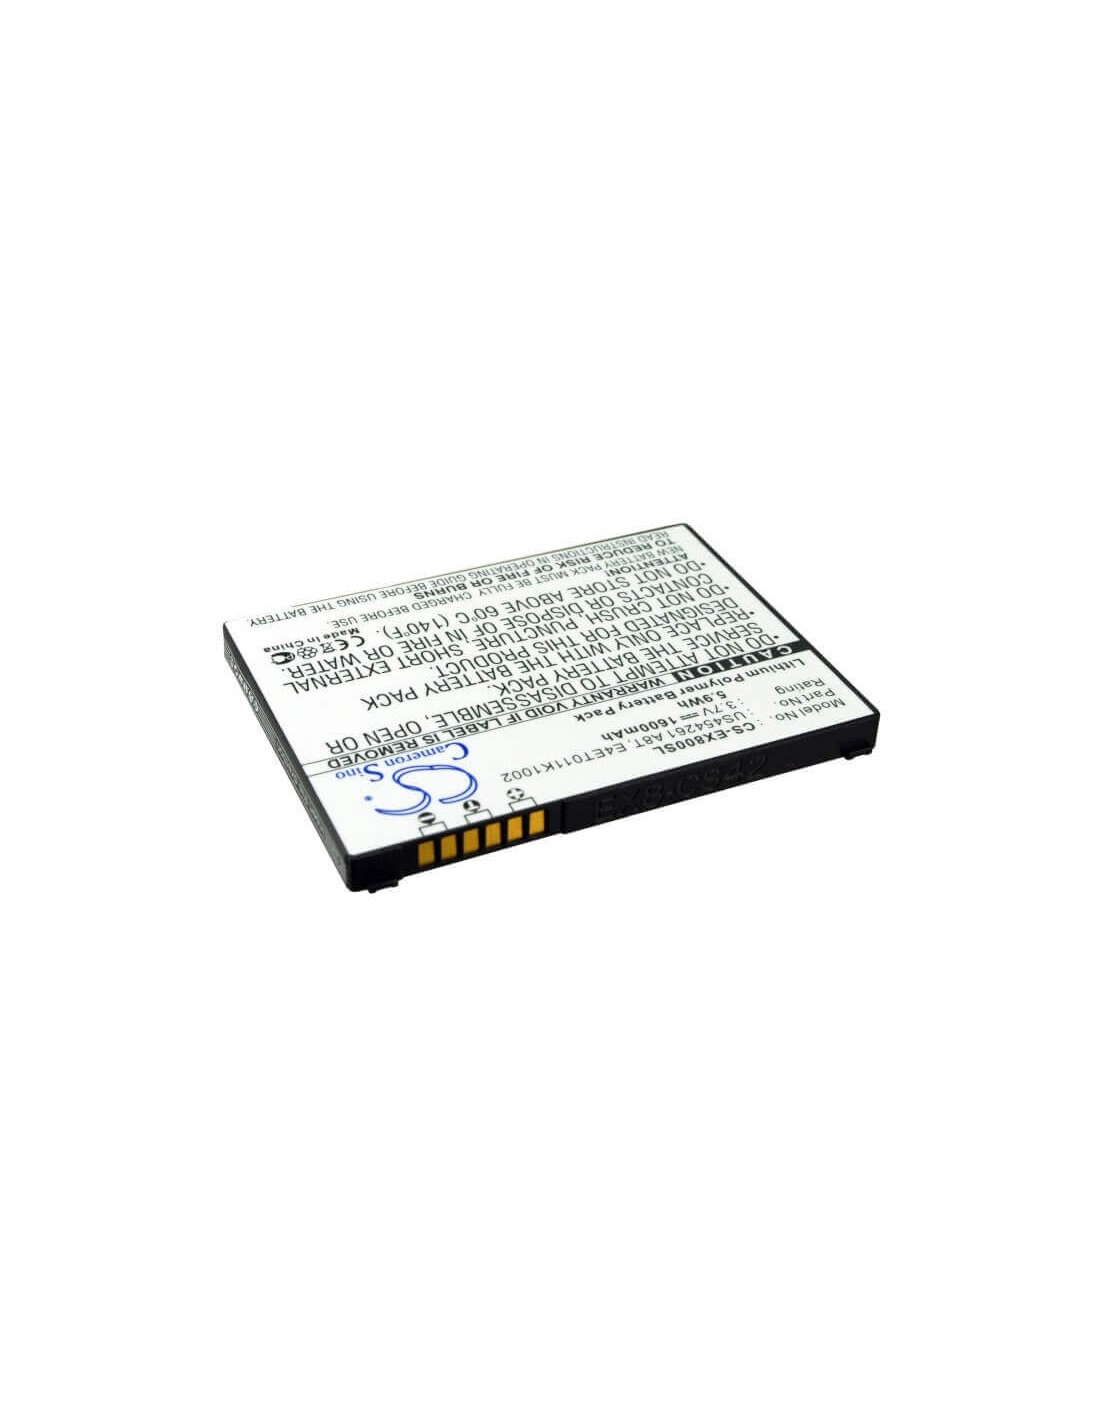 Battery for Acer Tempo M900 3.7V, 1600mAh - 5.92Wh